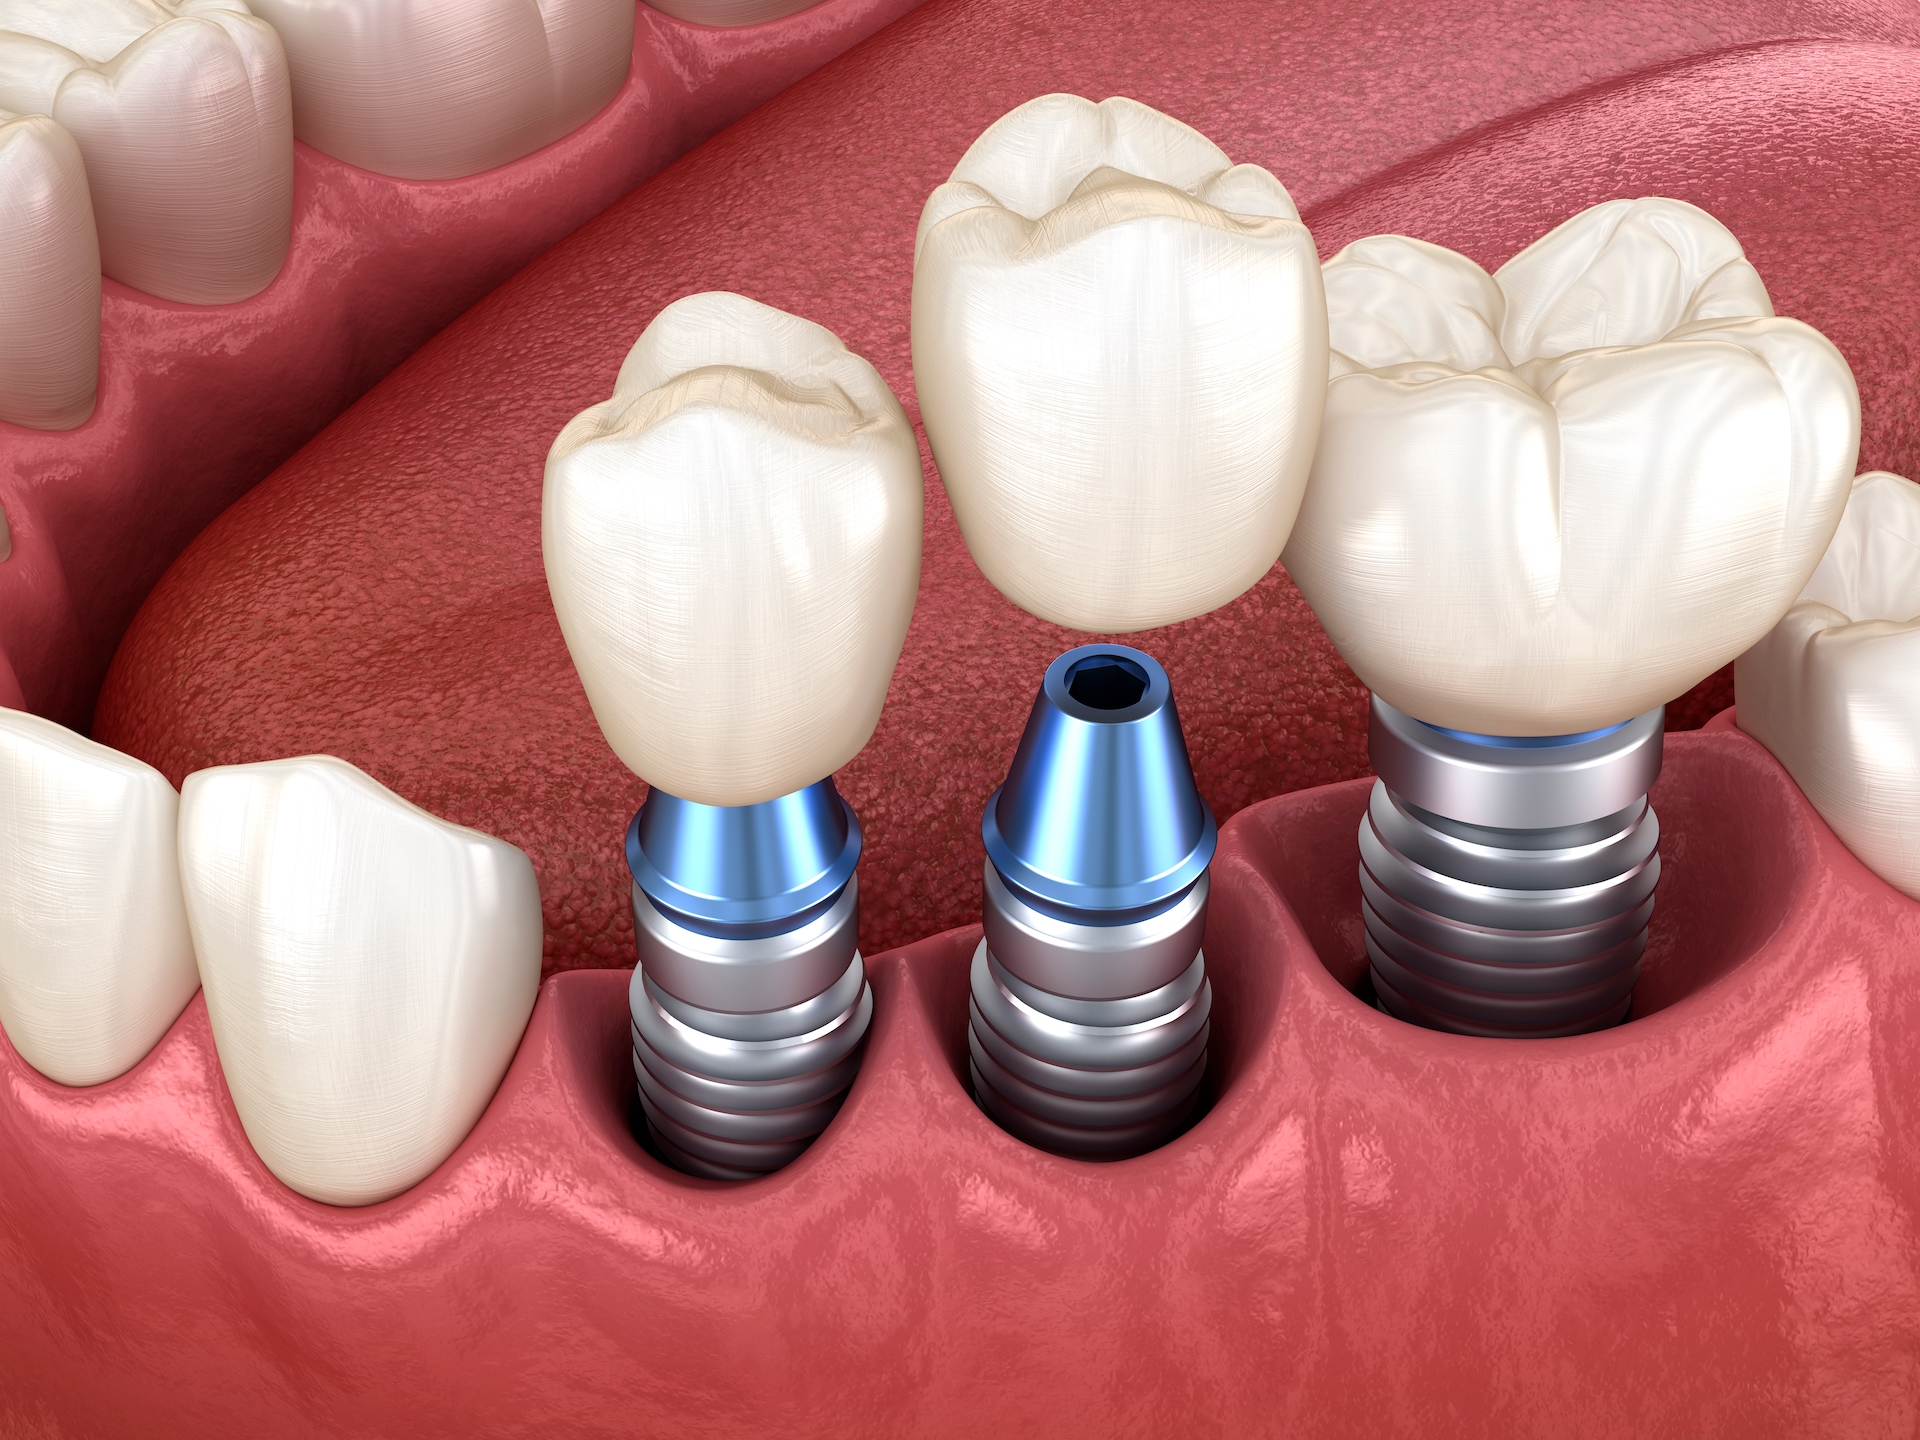 3 Signs You May Need Dental Crowns